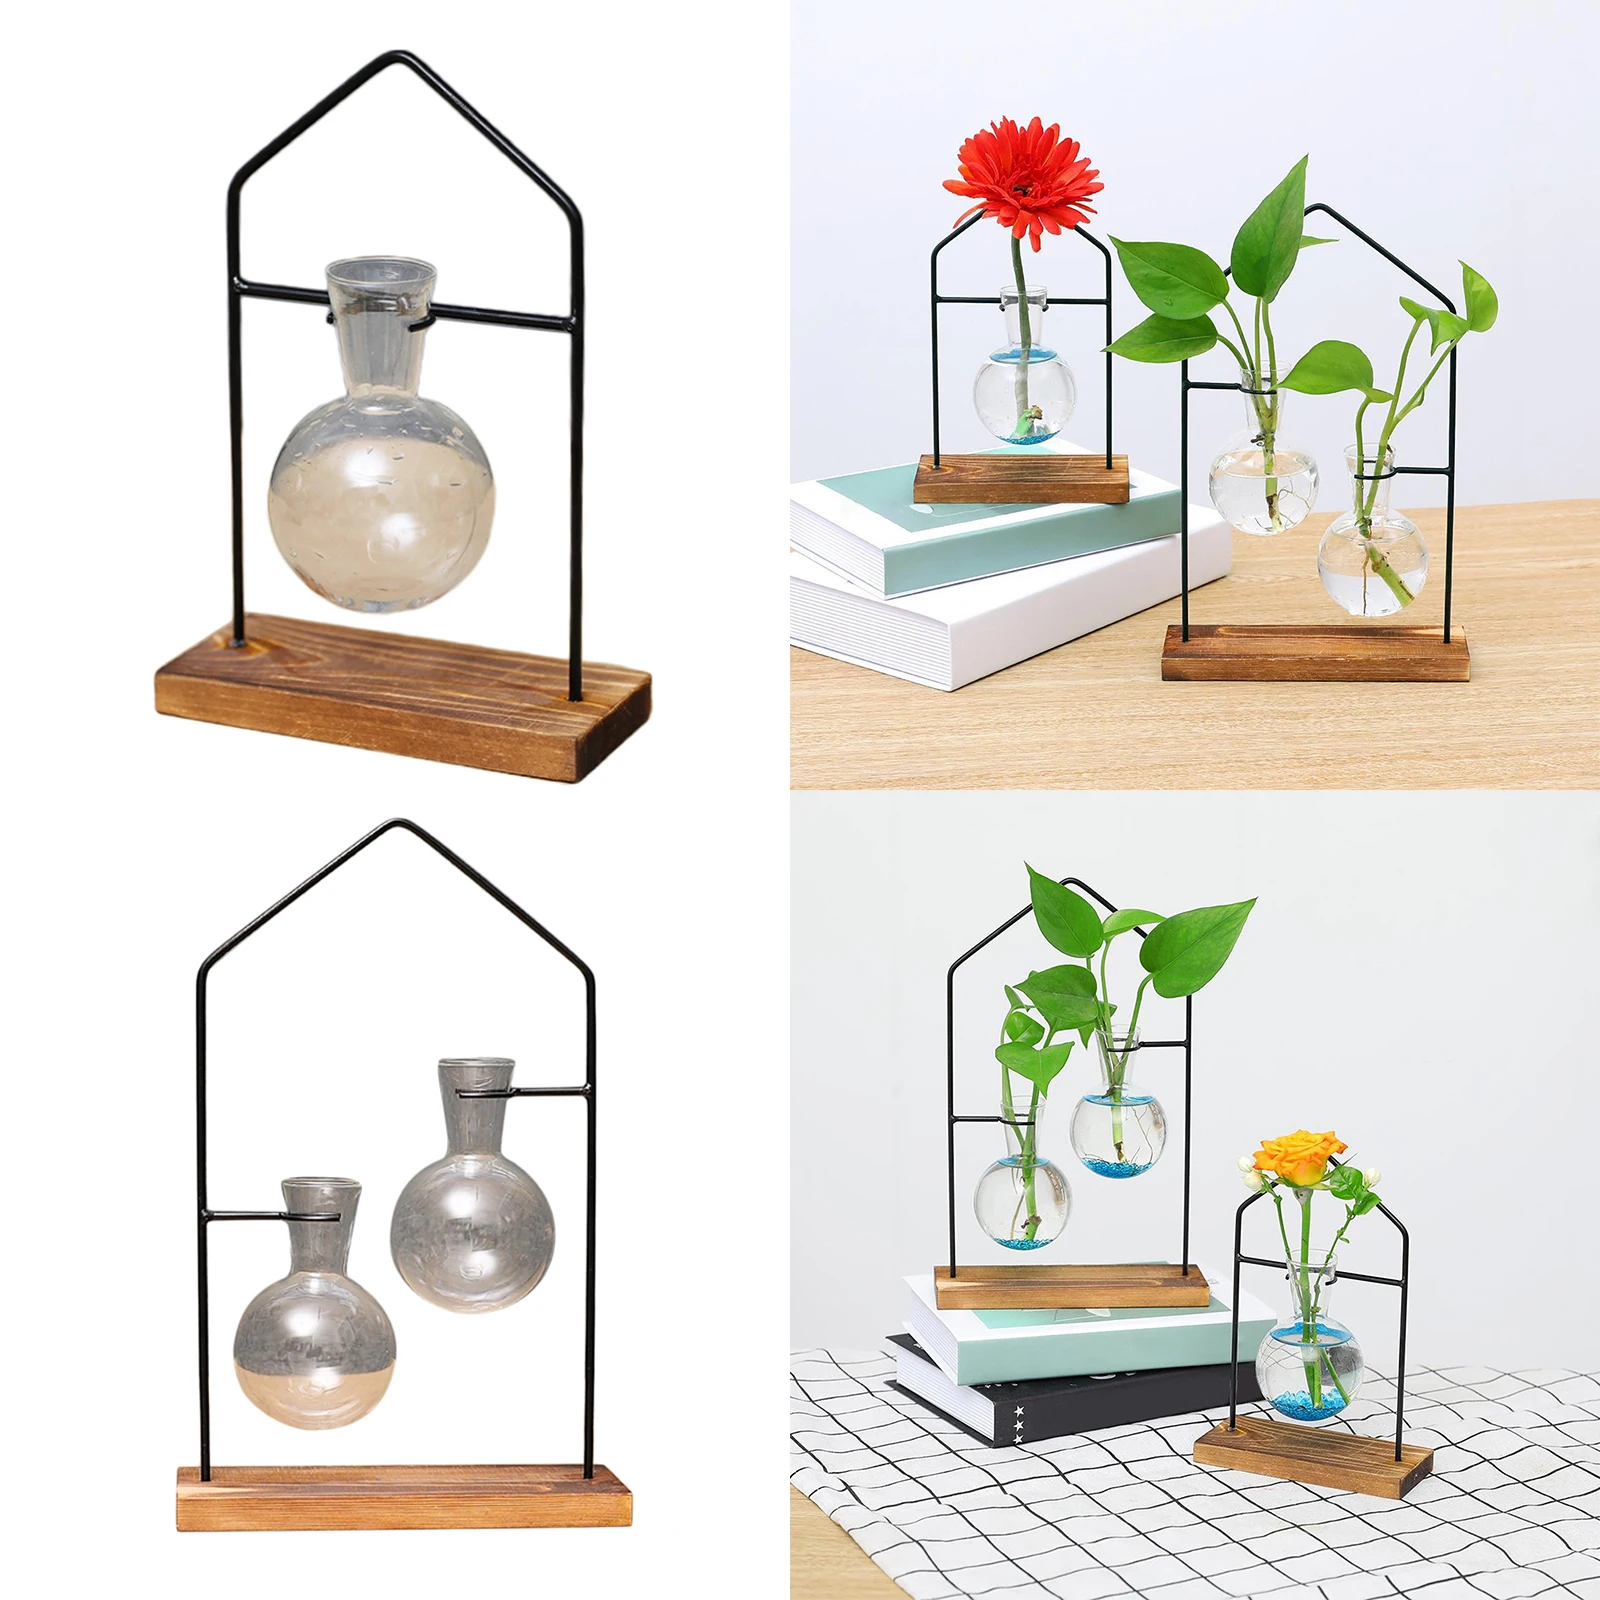 Plant Glass Vase Hydroponic Flower Pots with Wooden Stand Terrarium Home Decor